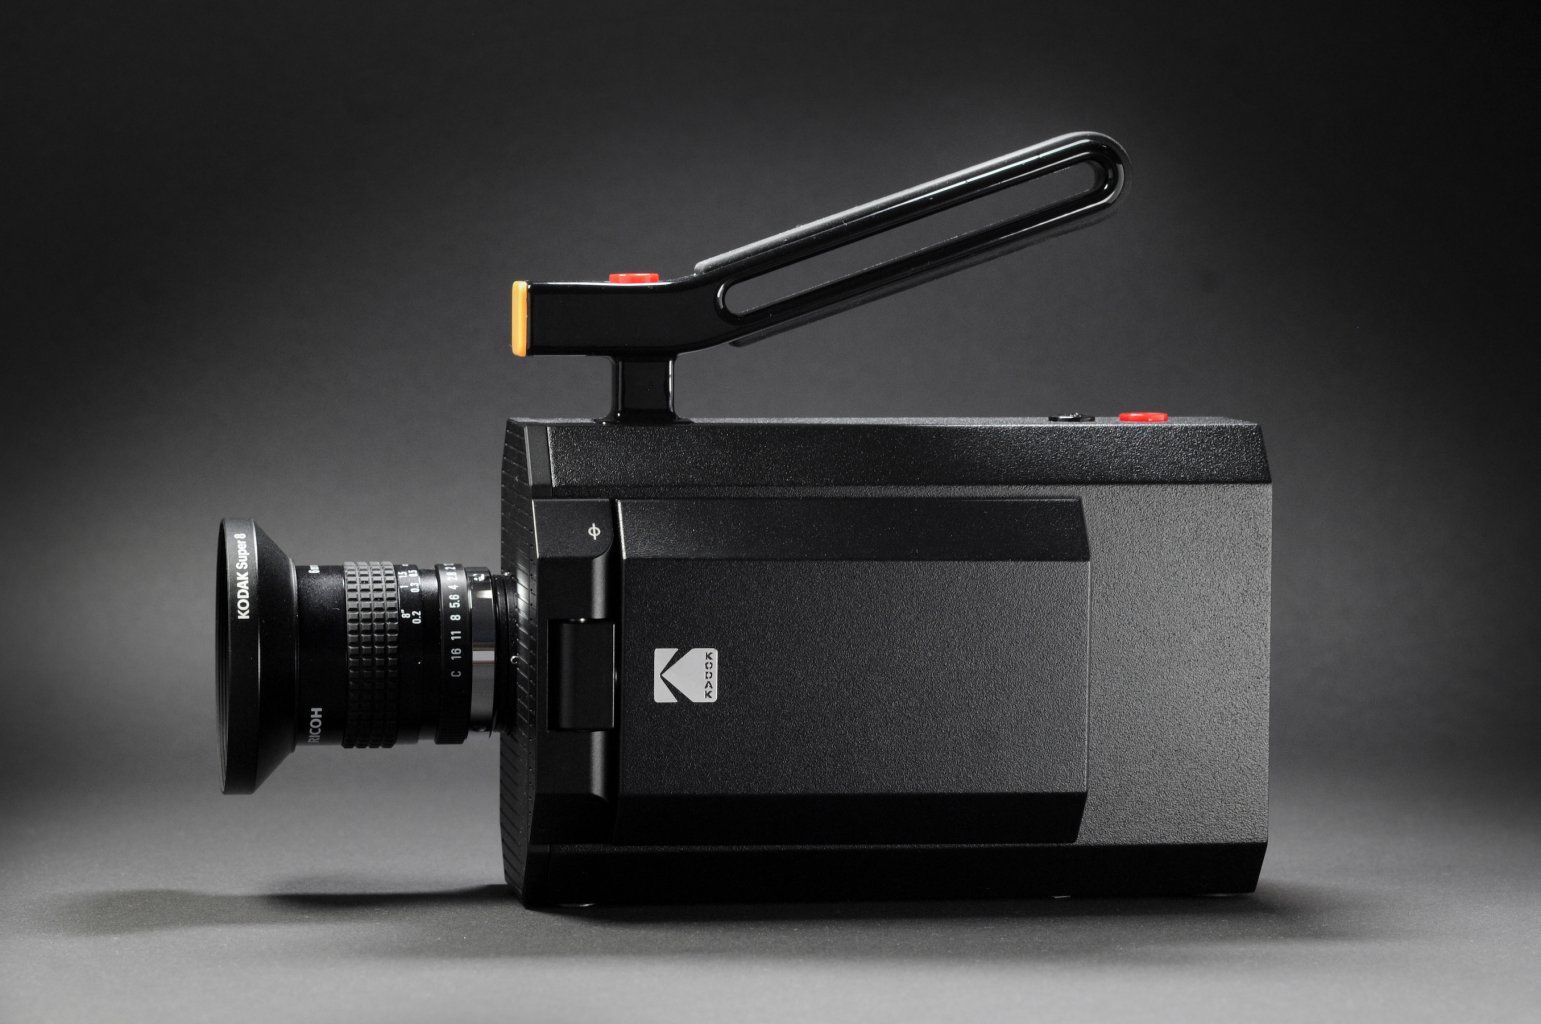 Kodak Super 8 Camera